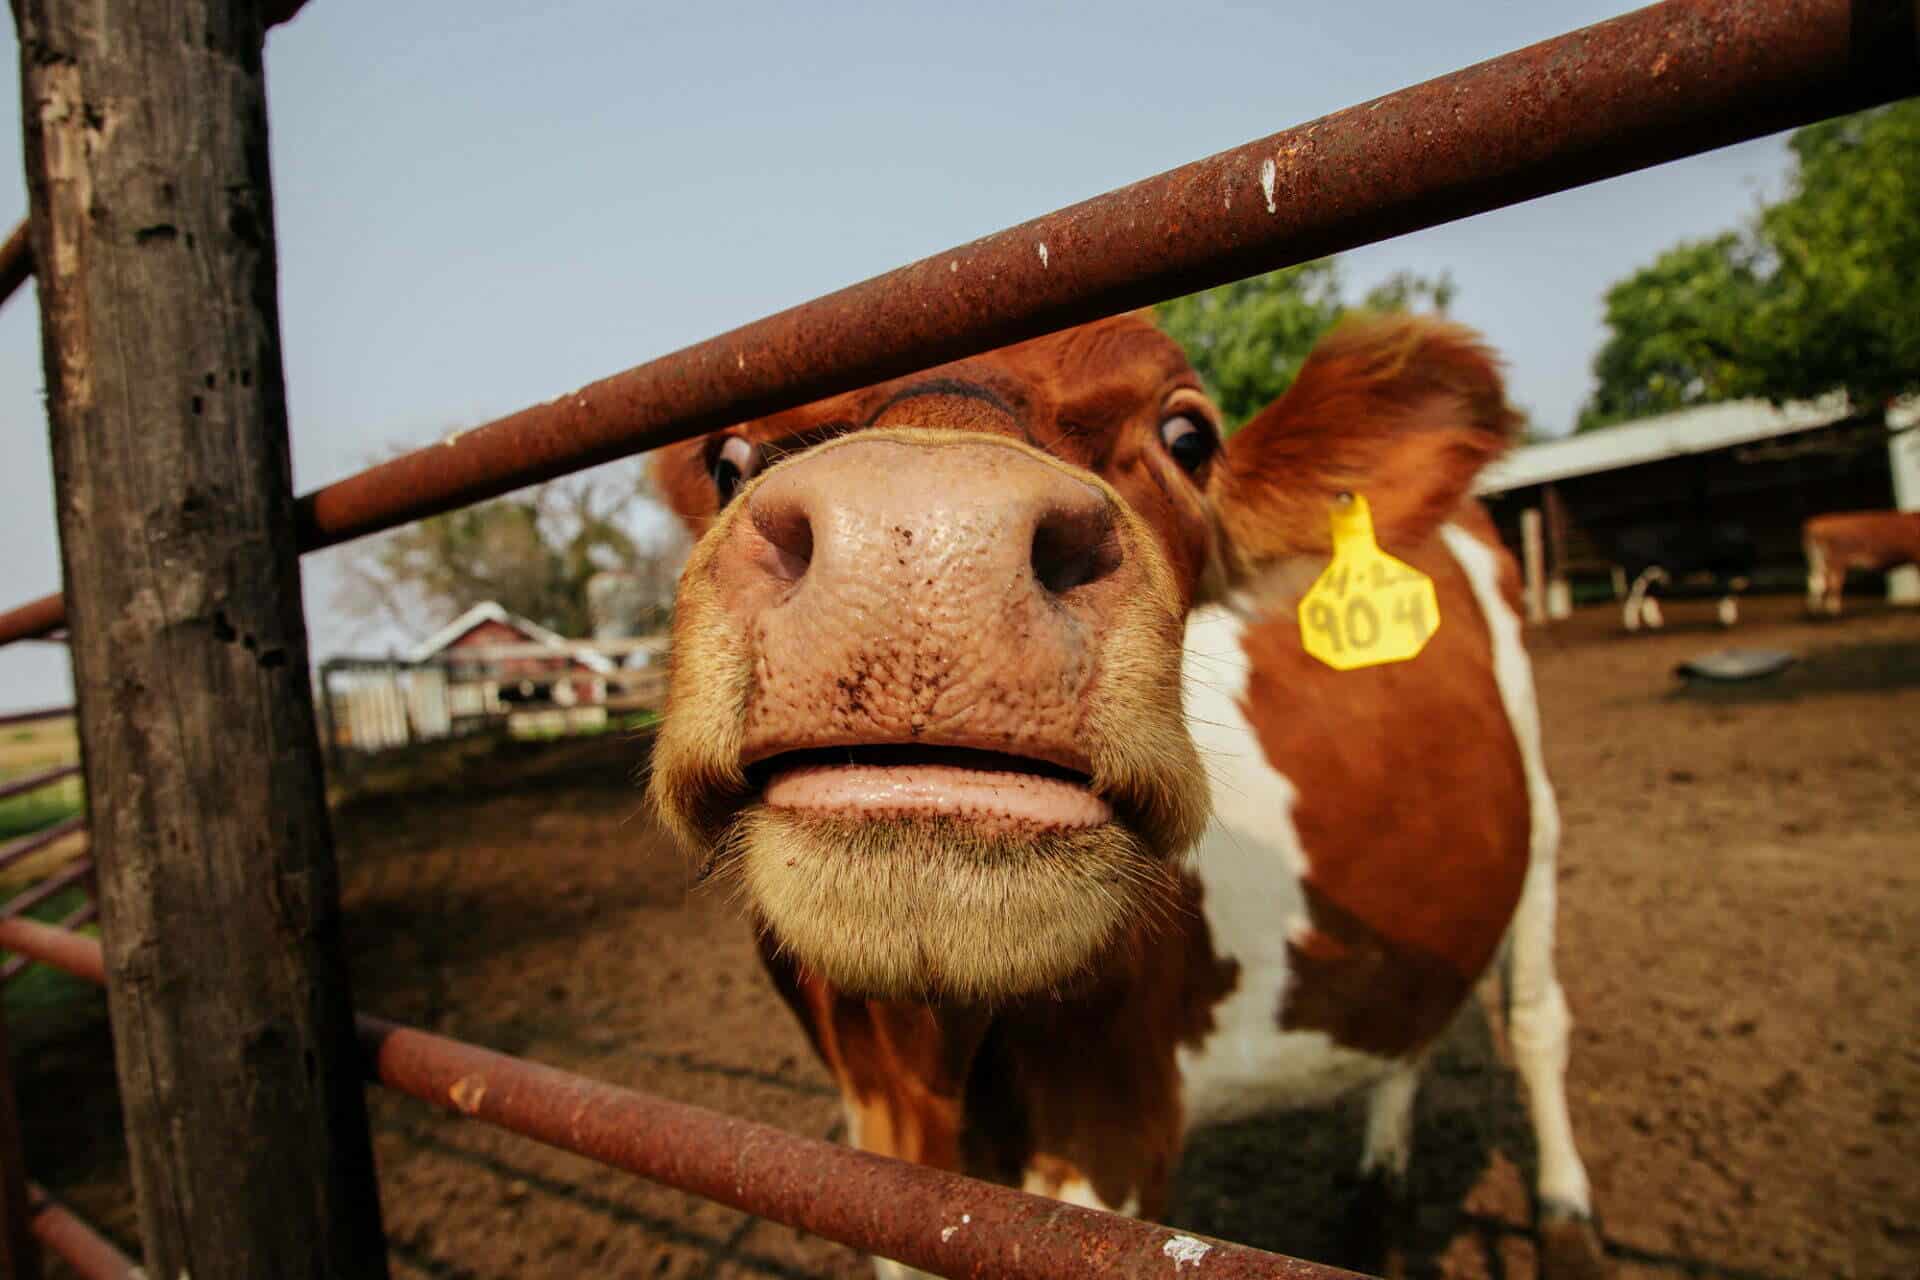 A cow sticks its nose through a metal gate.